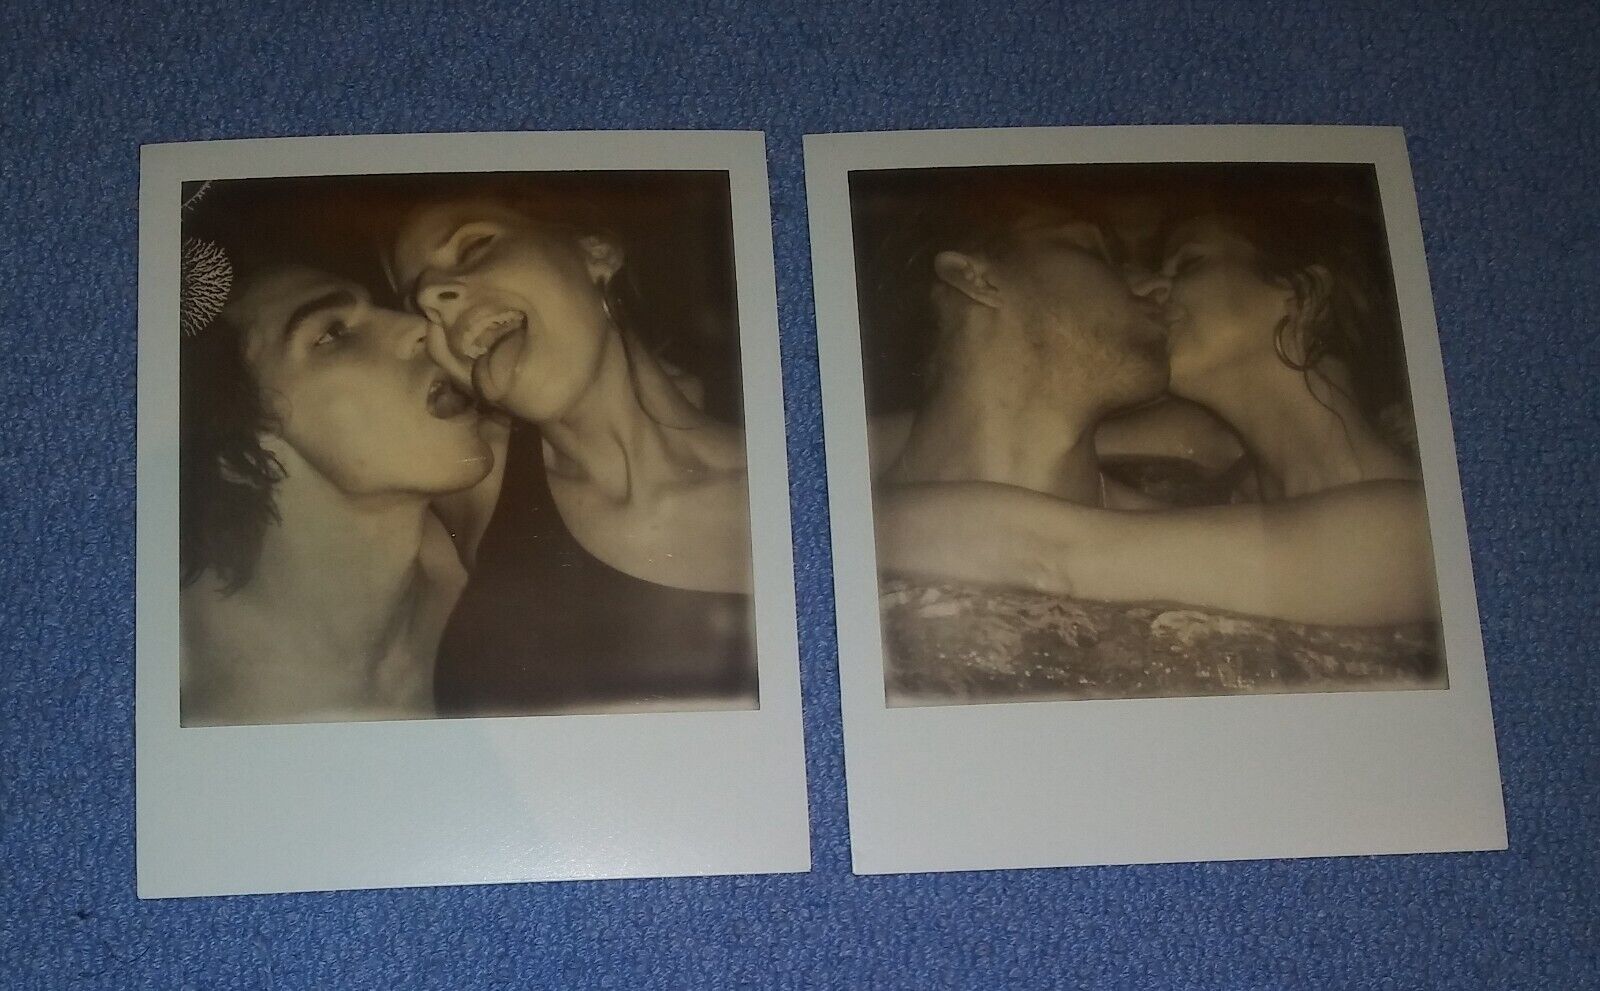 Vintage 70's polaroid couple Photo's Affectionate Exotic Models 